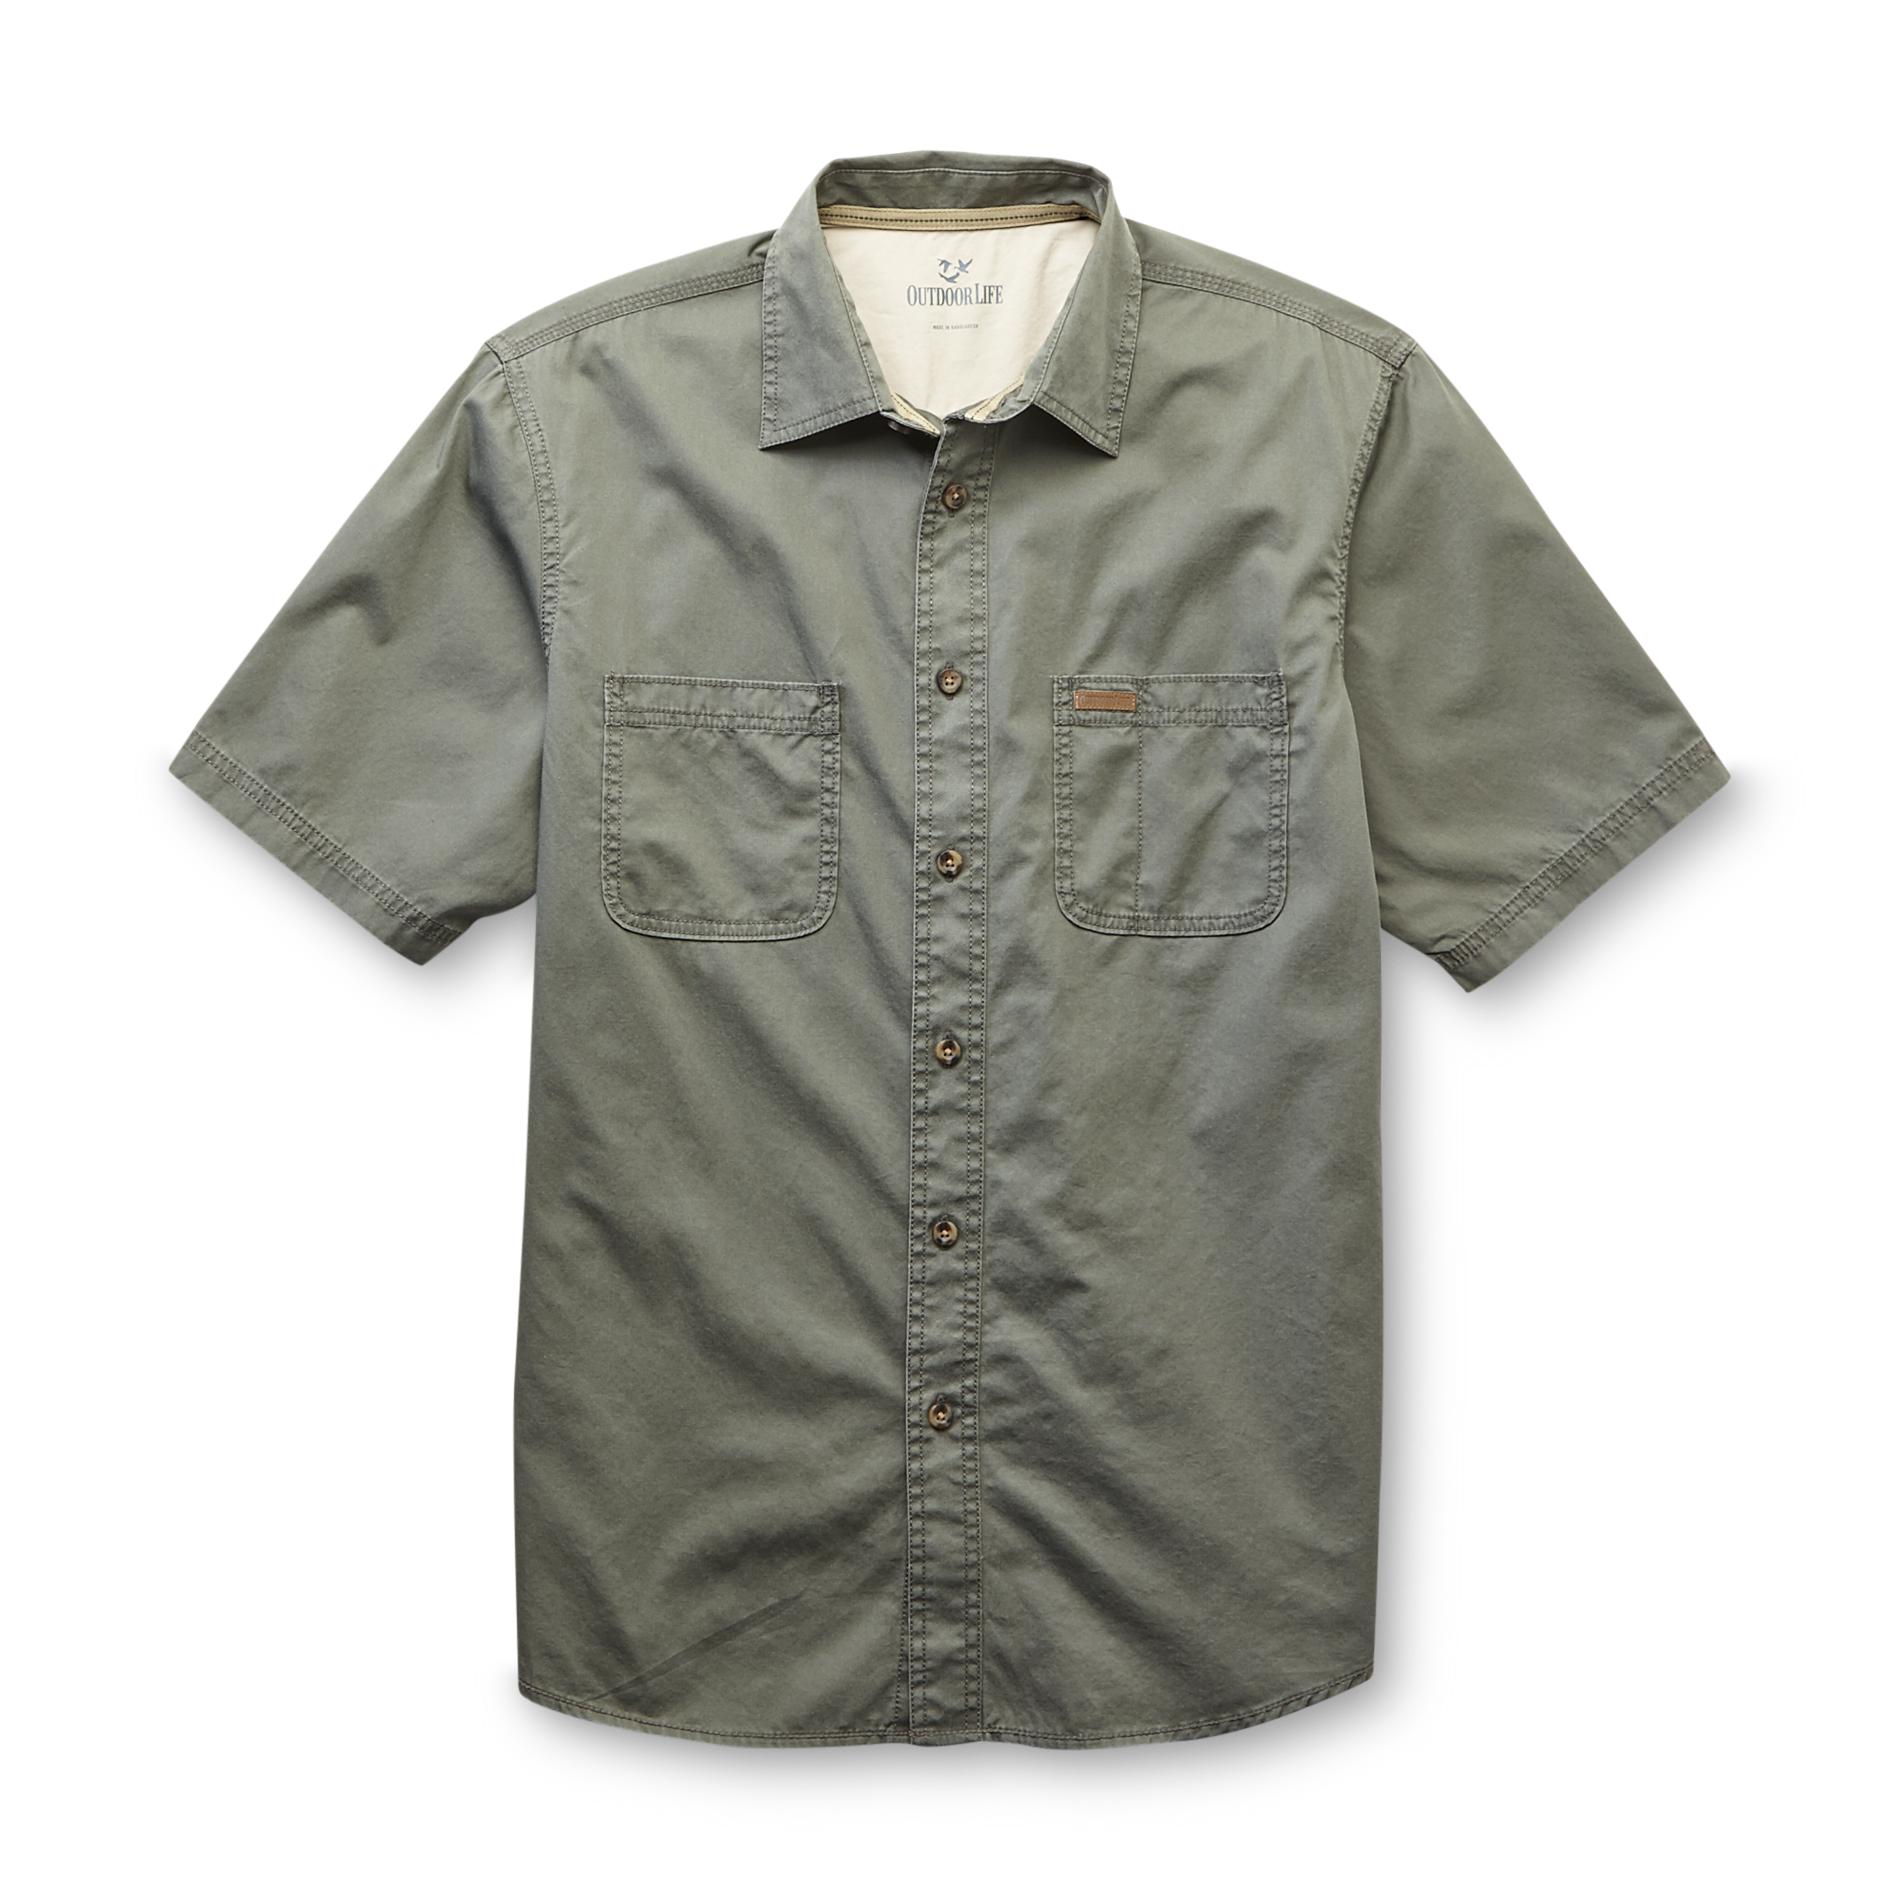 Outdoor Life&reg; Men's Short-Sleeve Twill Shirt